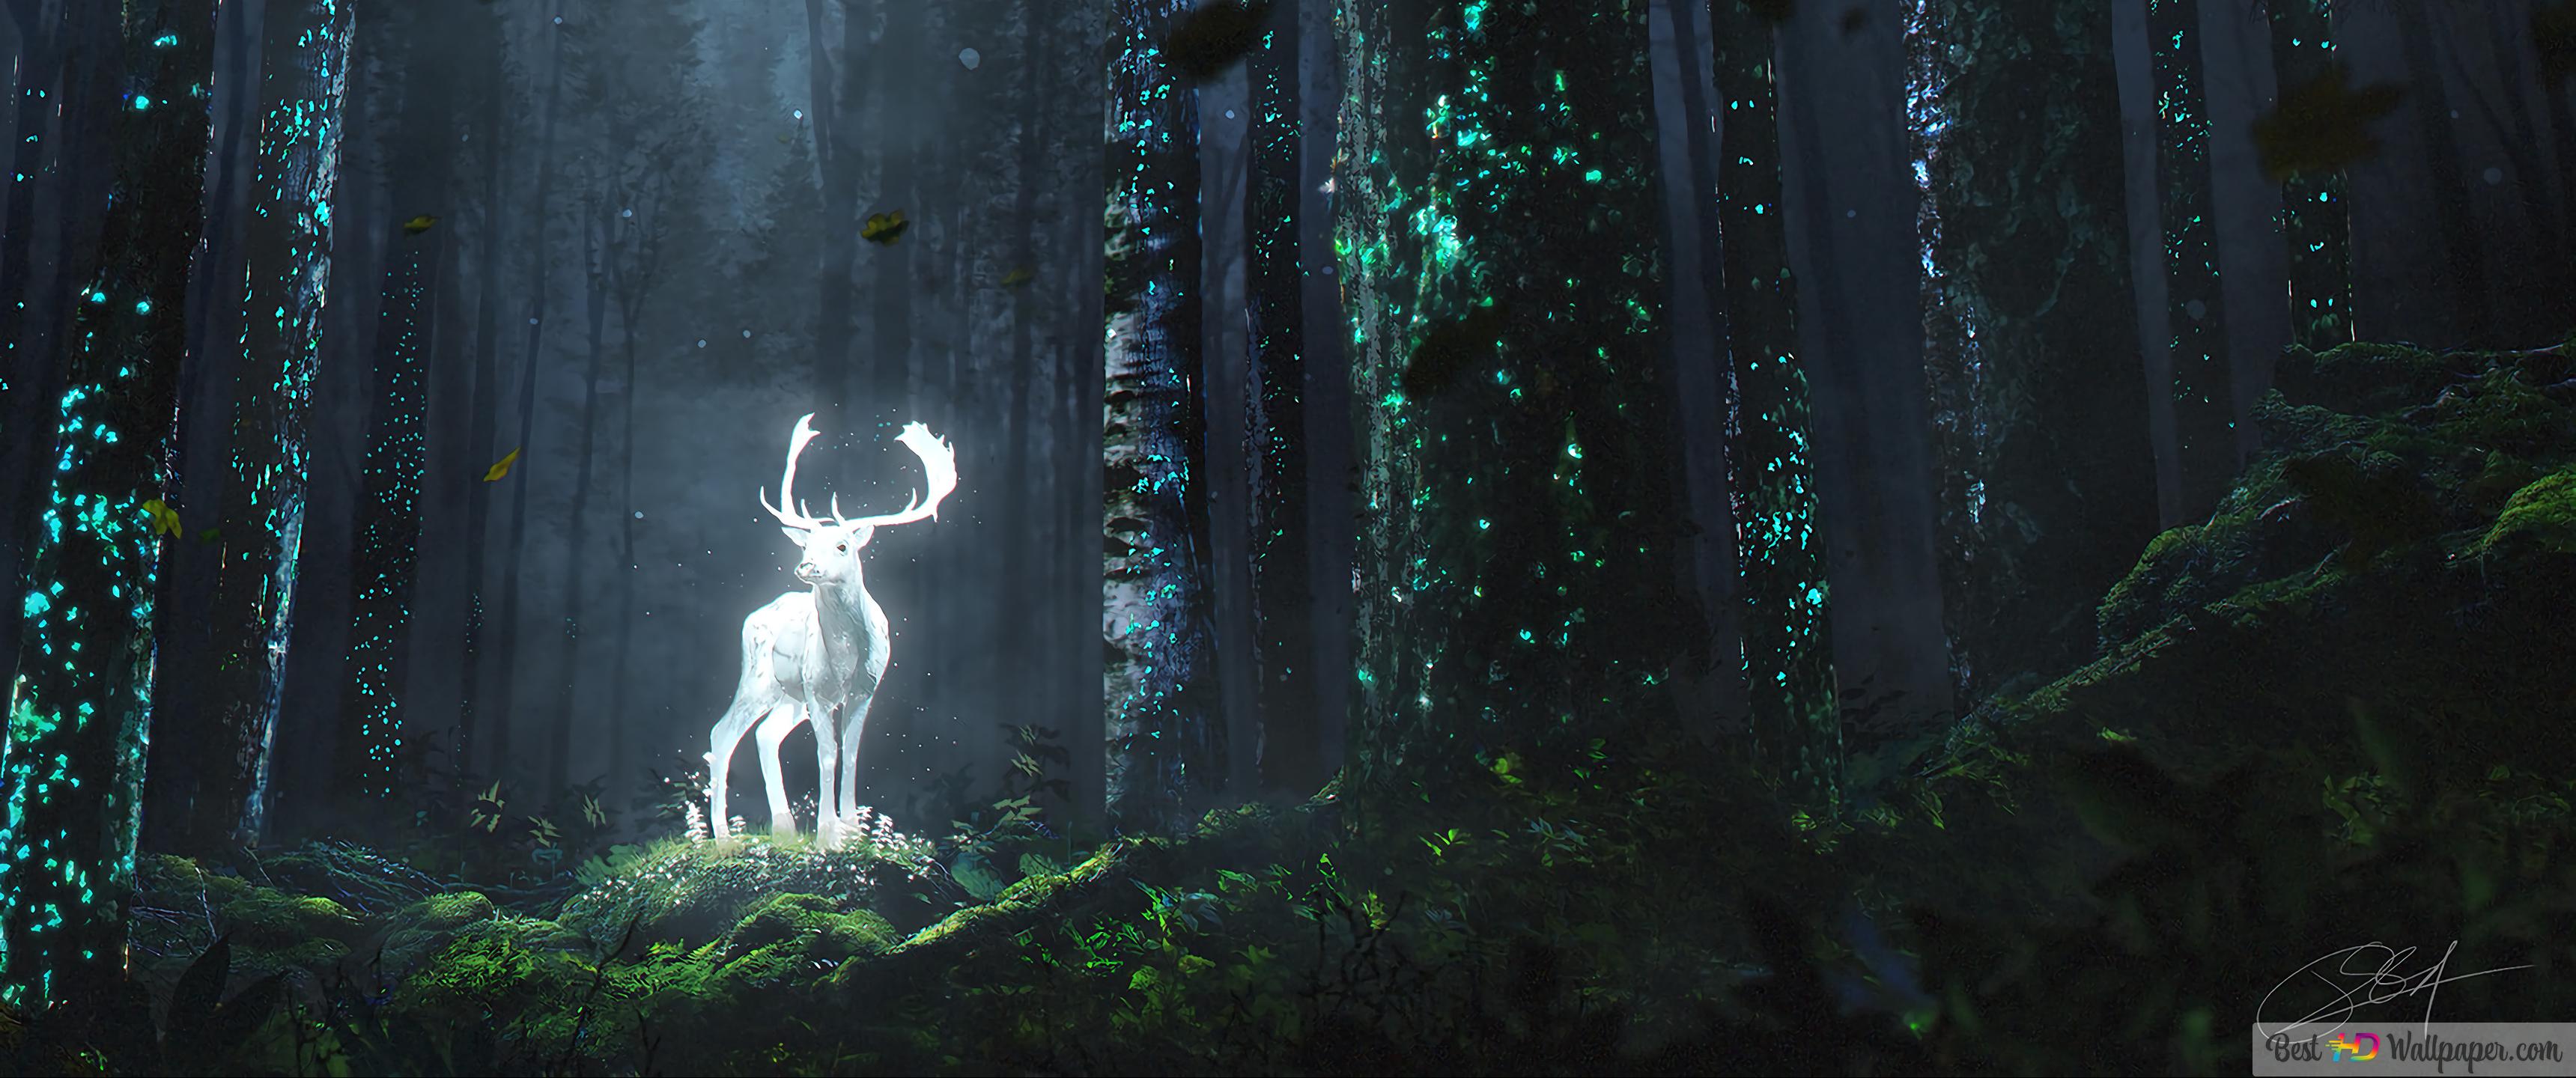 Deer forest night k wallpaper download